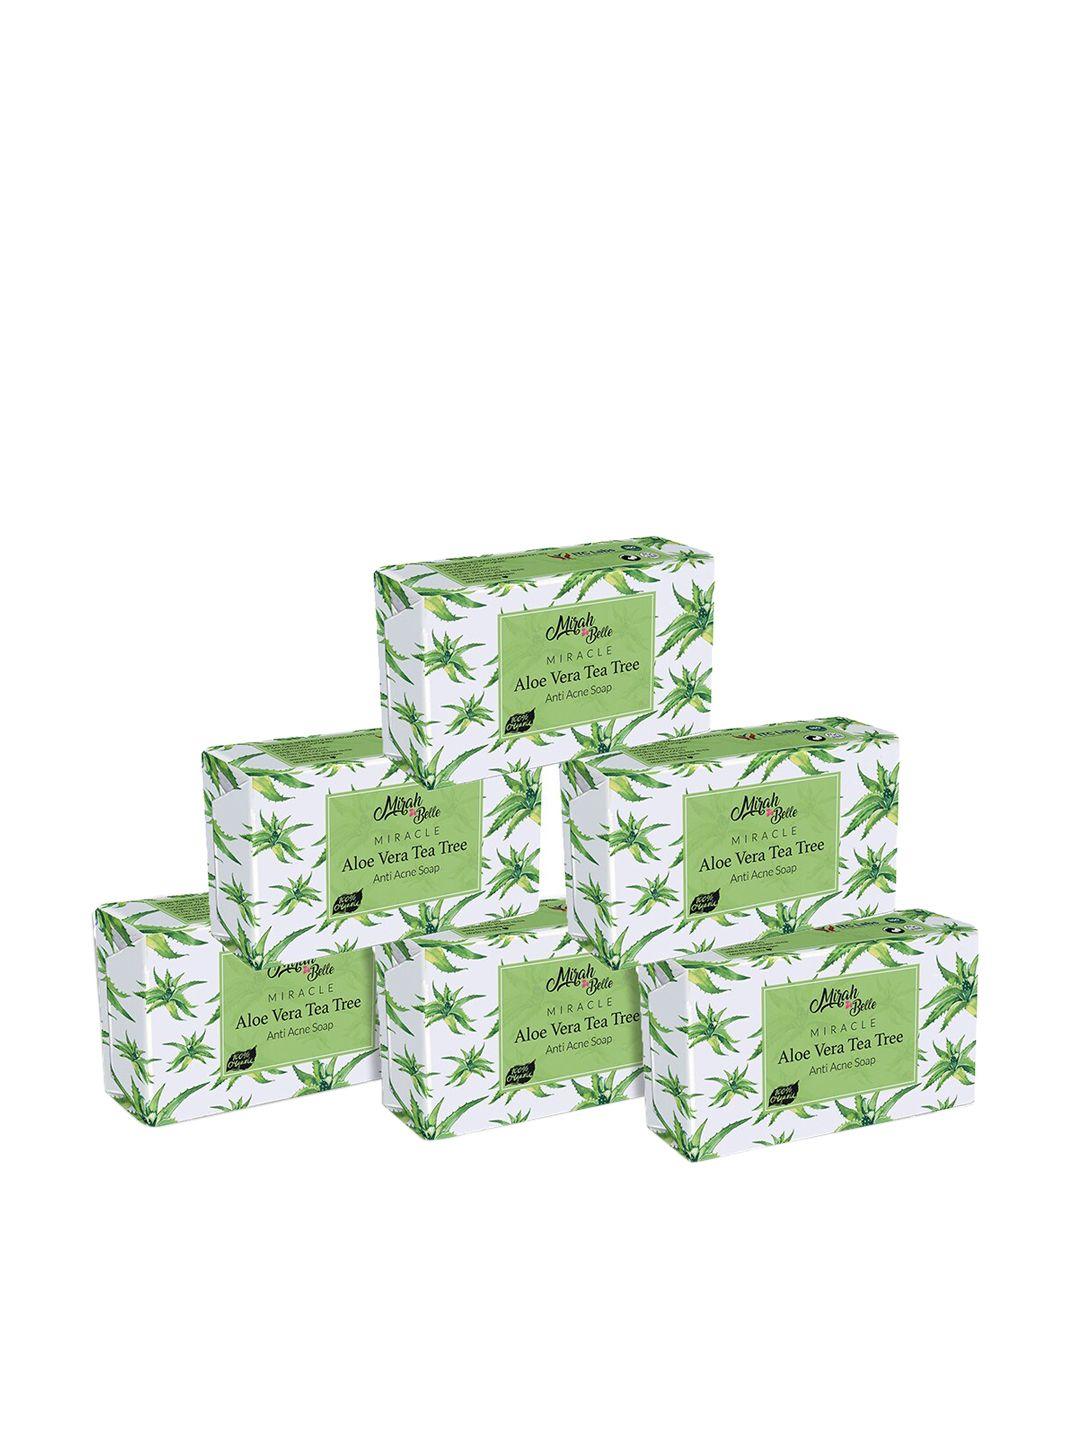 mirah belle set of 6 organic aloe vera-tea tree anti acne soaps